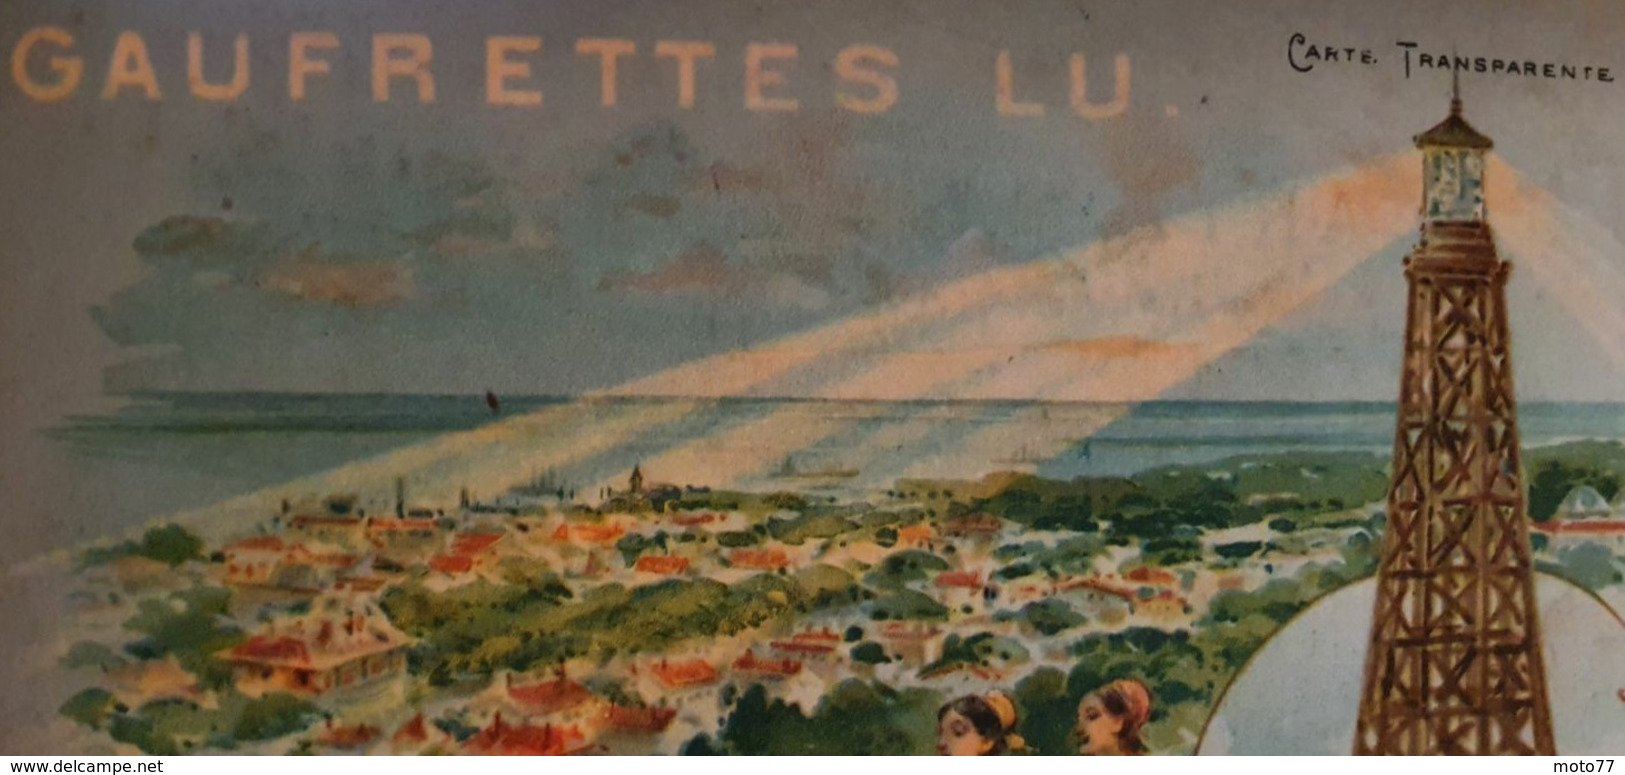 6 CPA cartes postales Chromo - série des  " TRANSPARENTES " - Lefèvre Utile - vers 1900 - Biscuit LU /41